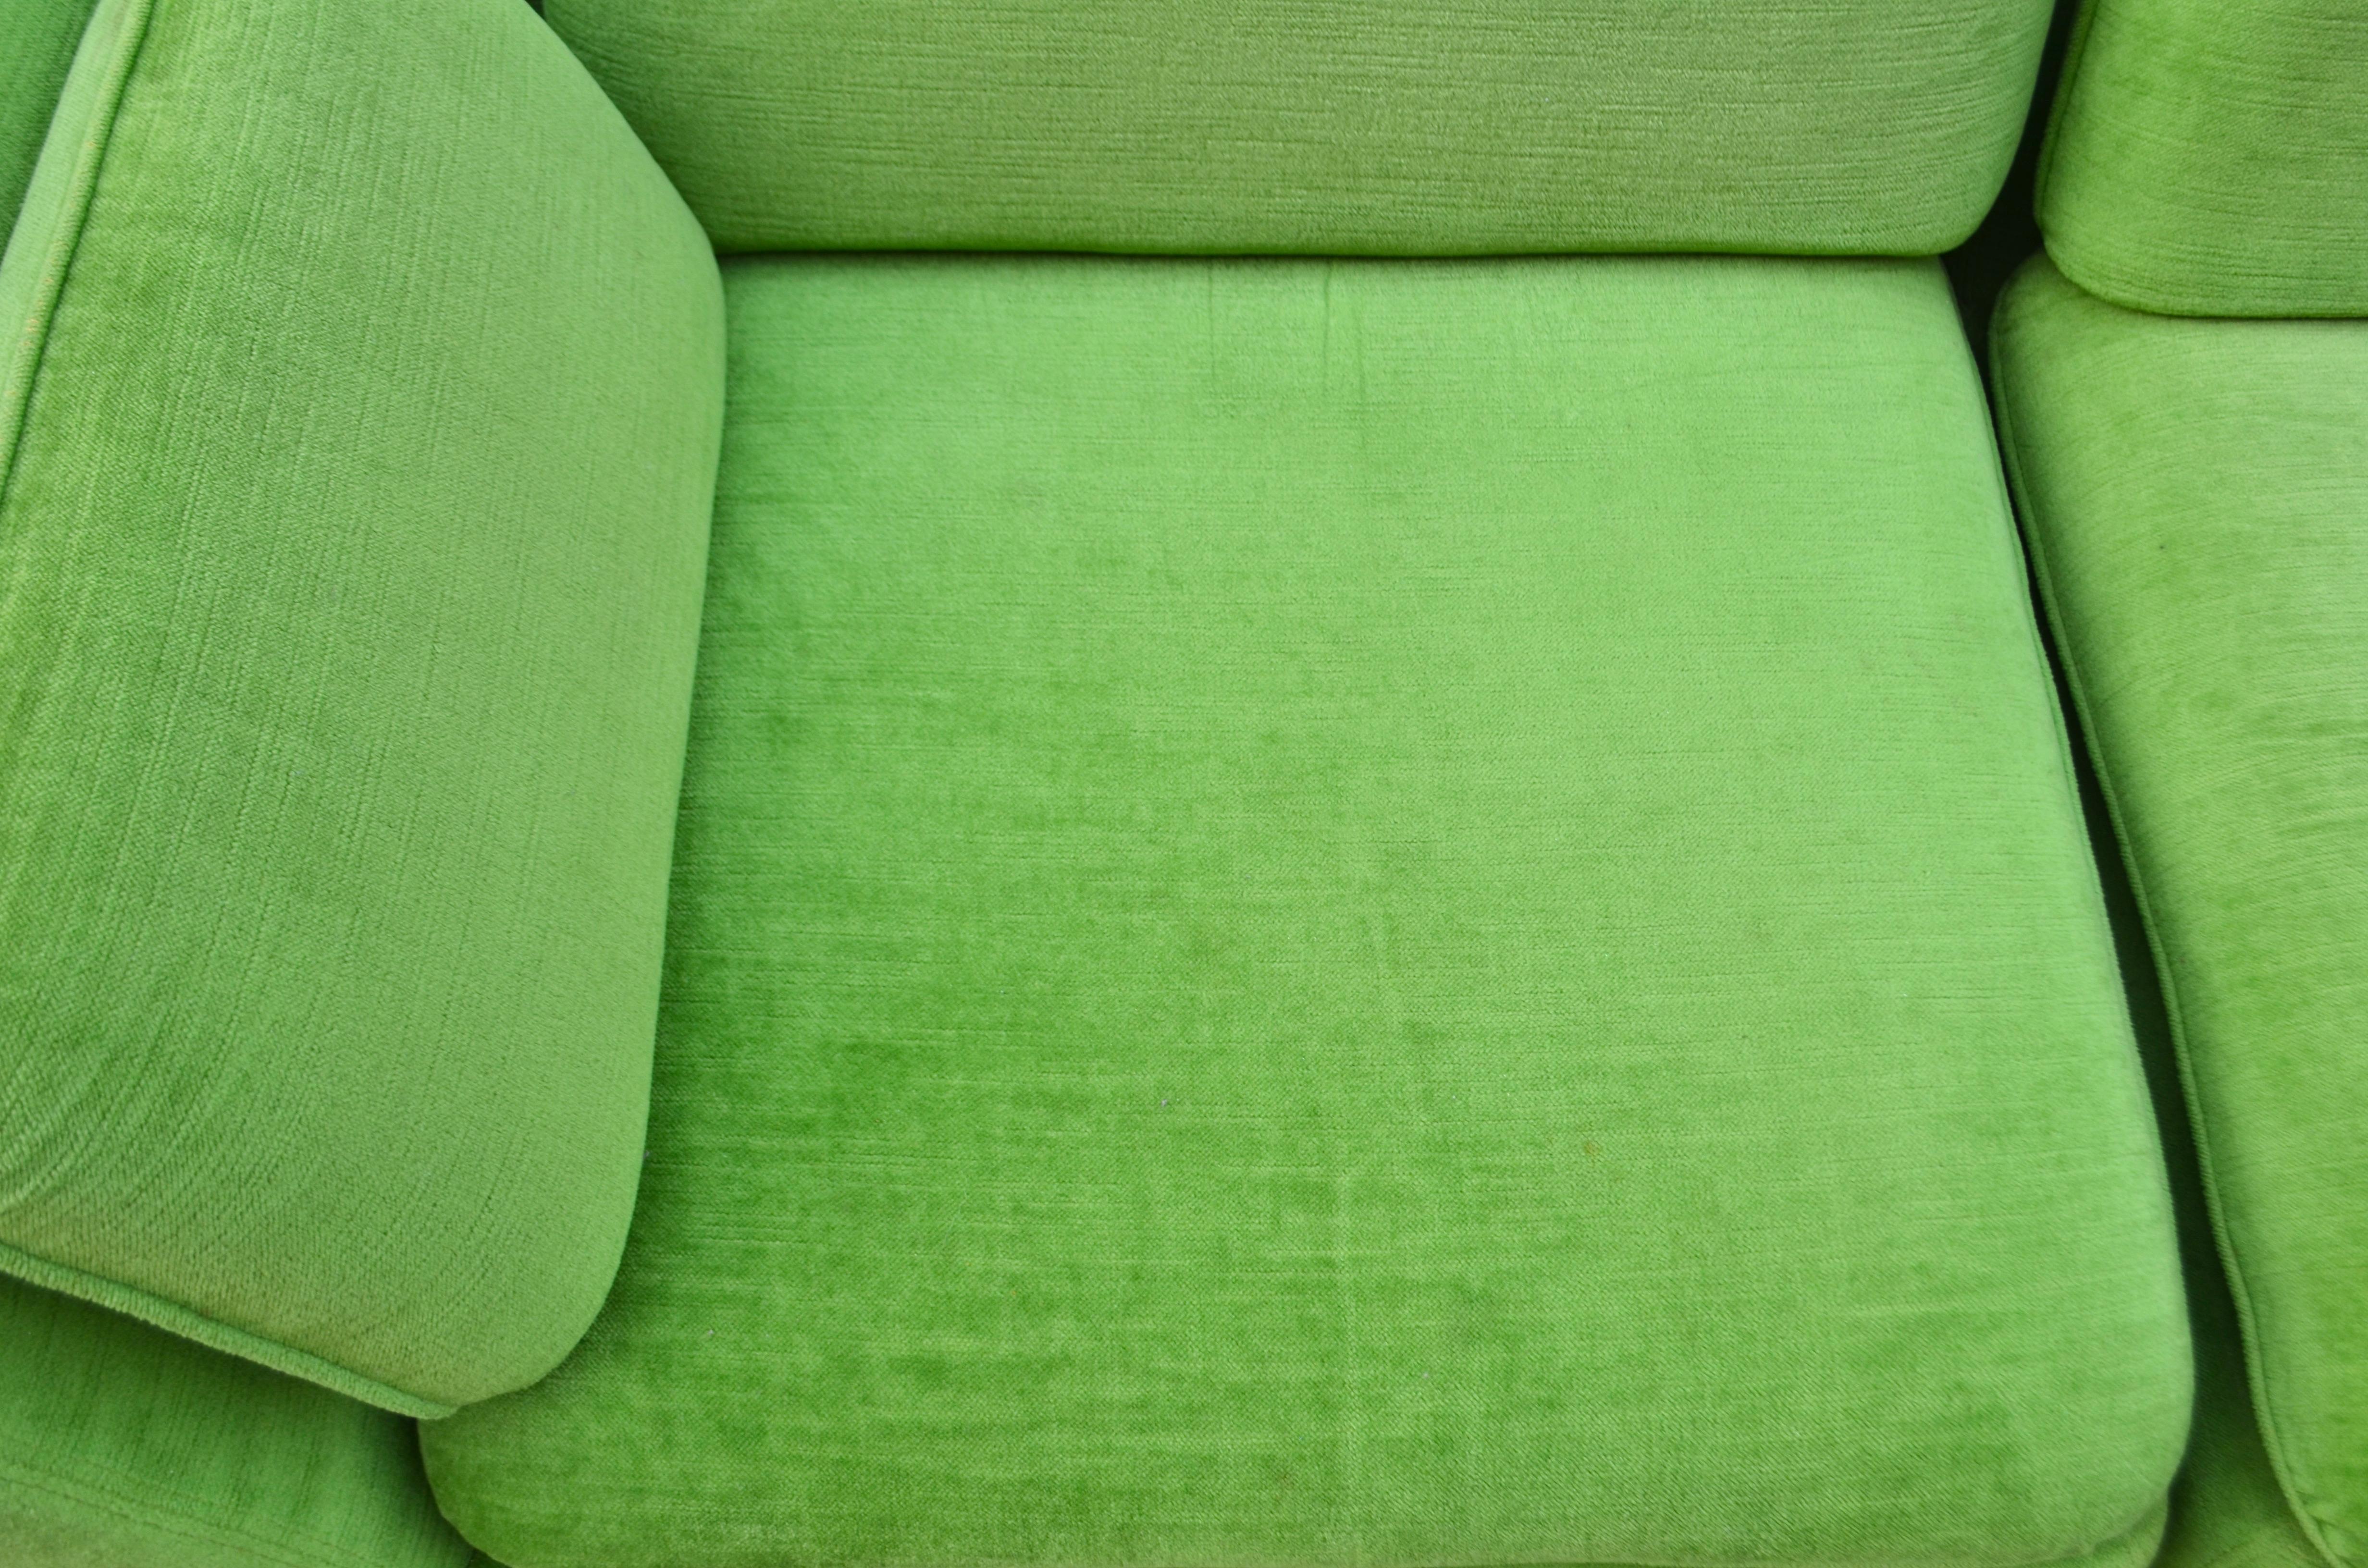 COR LÜBKE & ROLF Vintage Modular limegreen Living Room Suite Sectional Sofa  For Sale 6